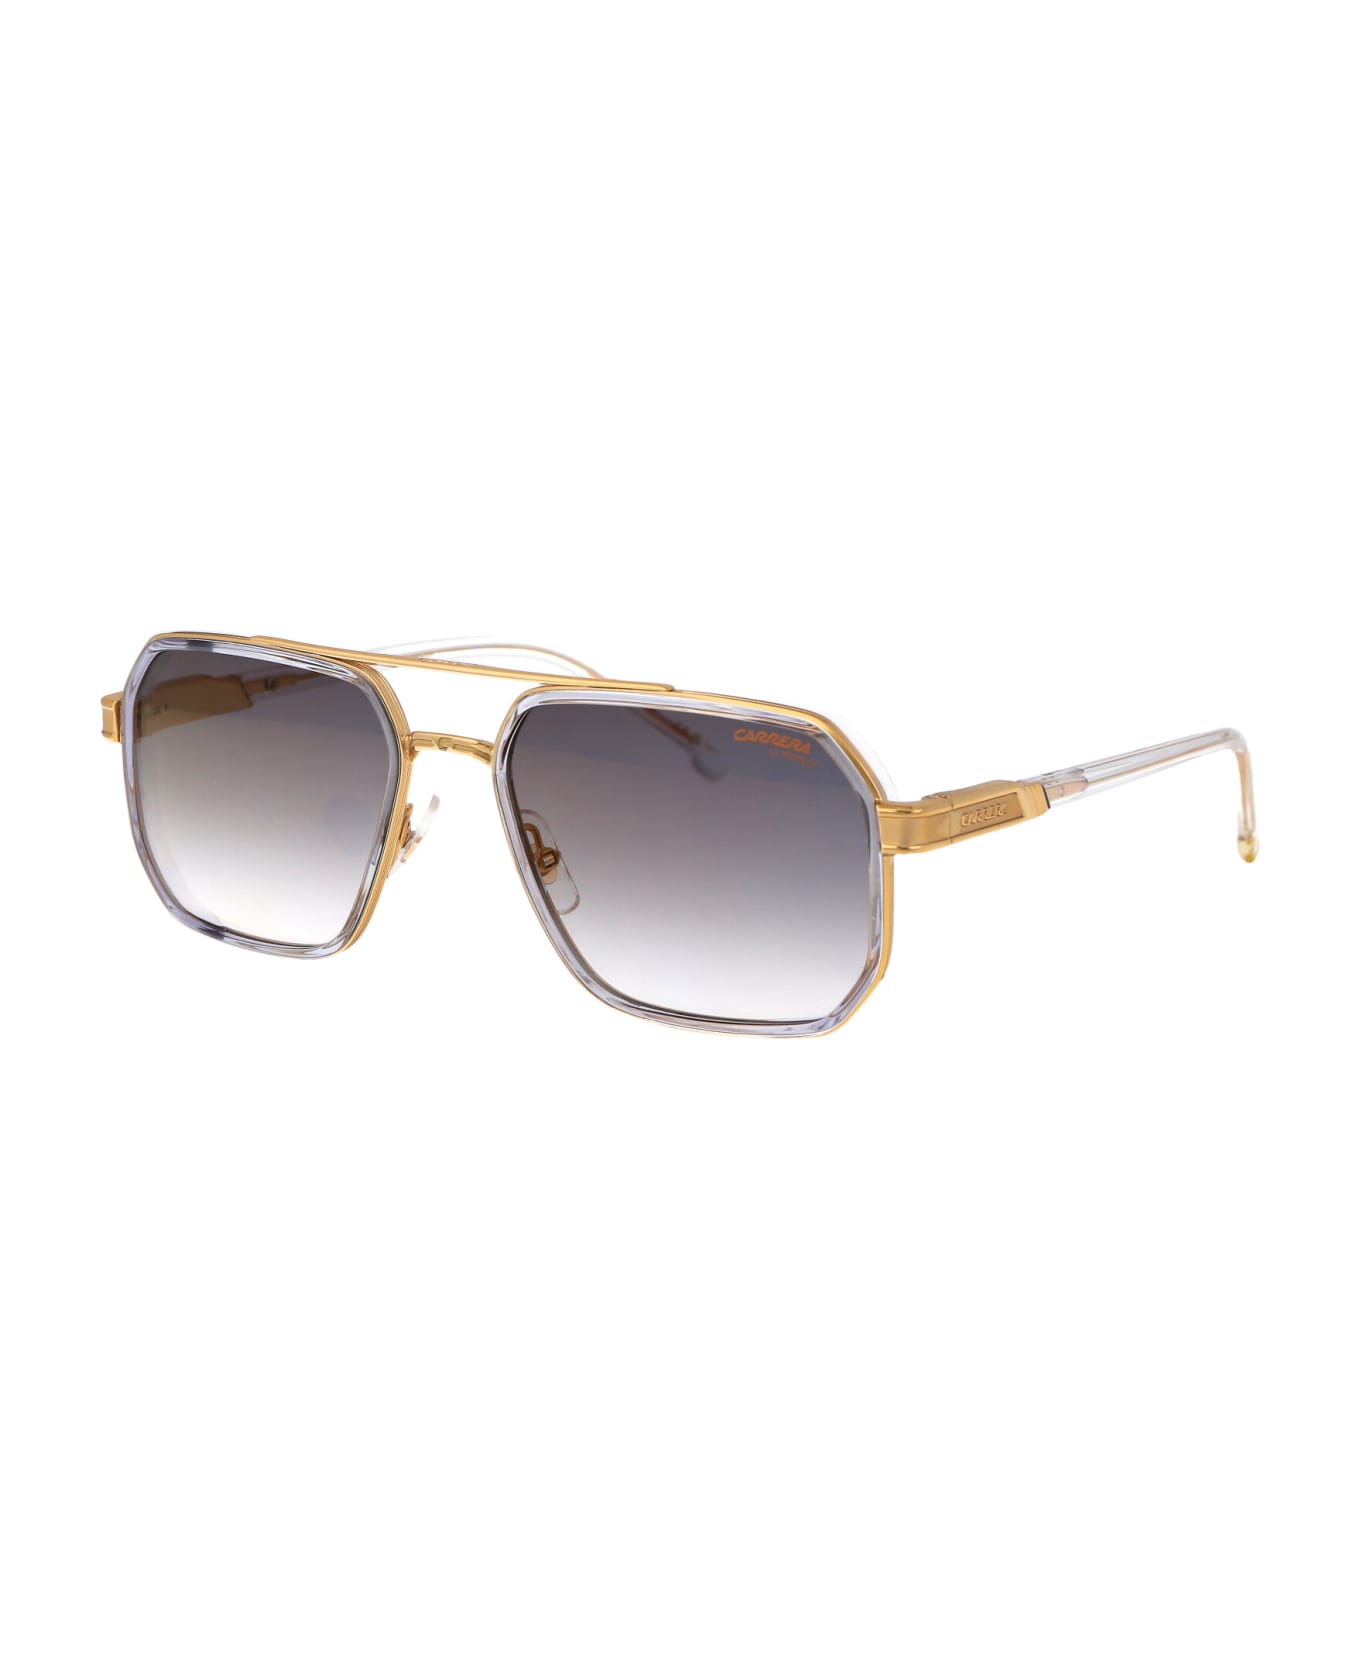 Carrera 1069/s Sunglasses - REJFQ CRYS GOLD サングラス